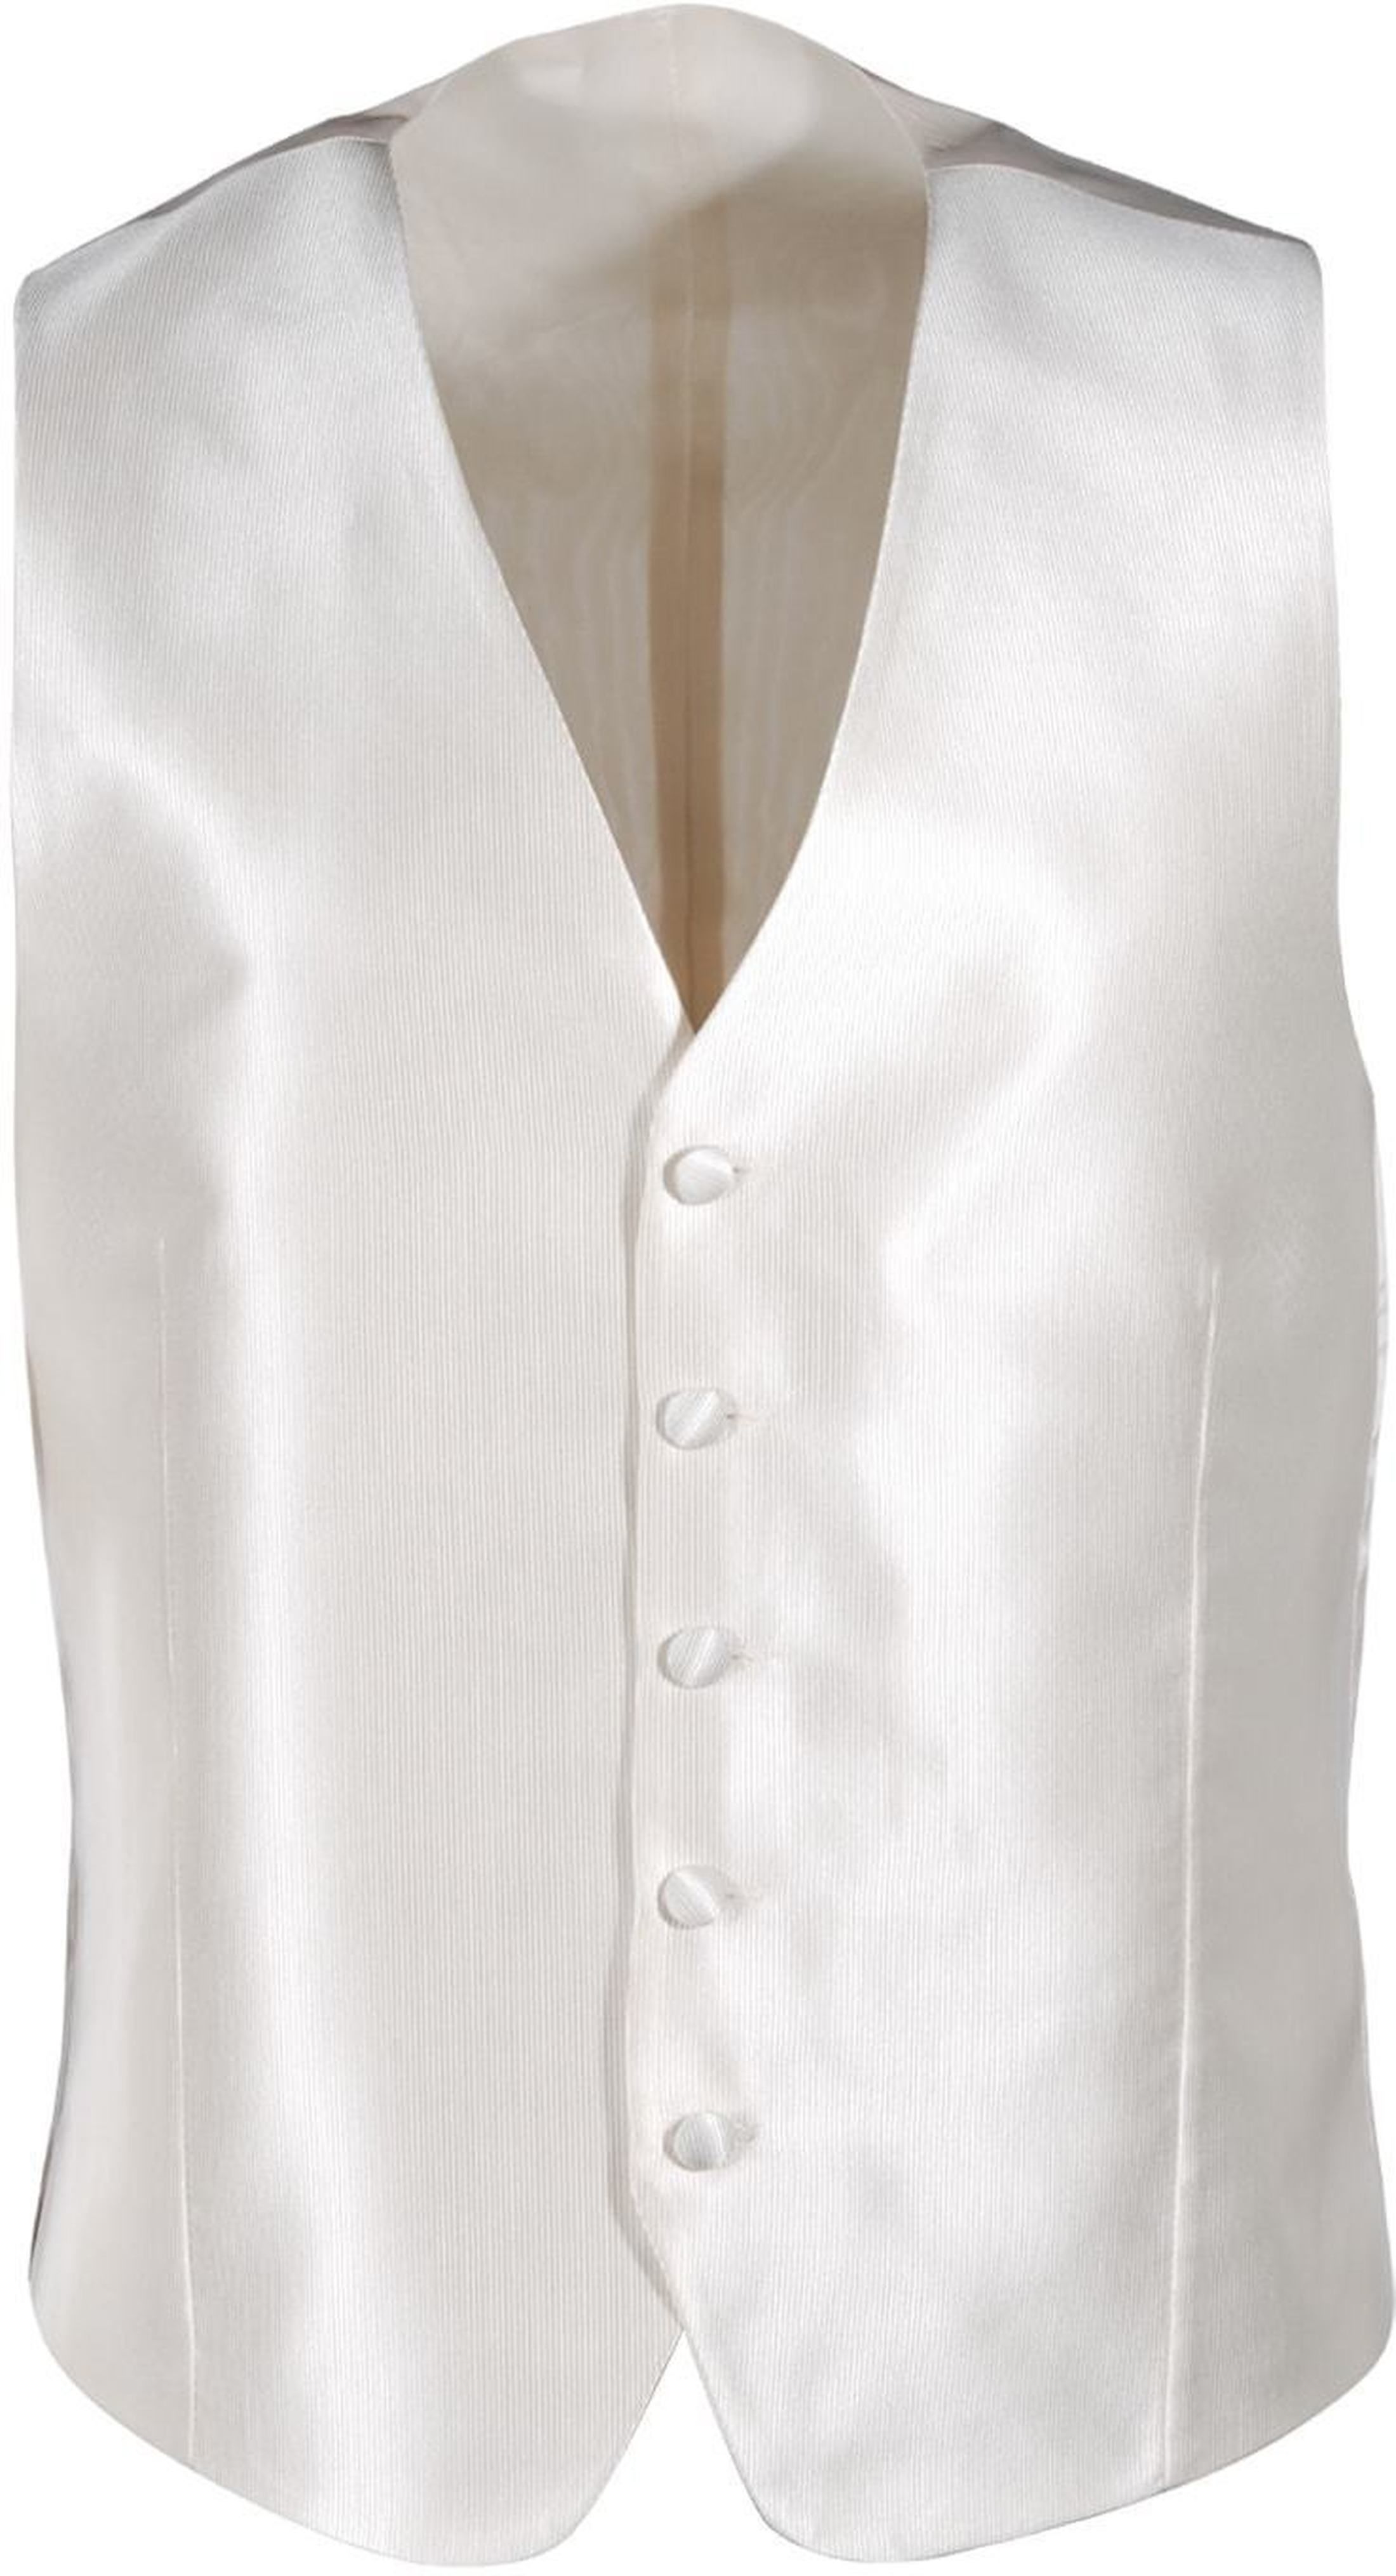 Wedding Waistcoat Ecru Twill Off-White size 44-R